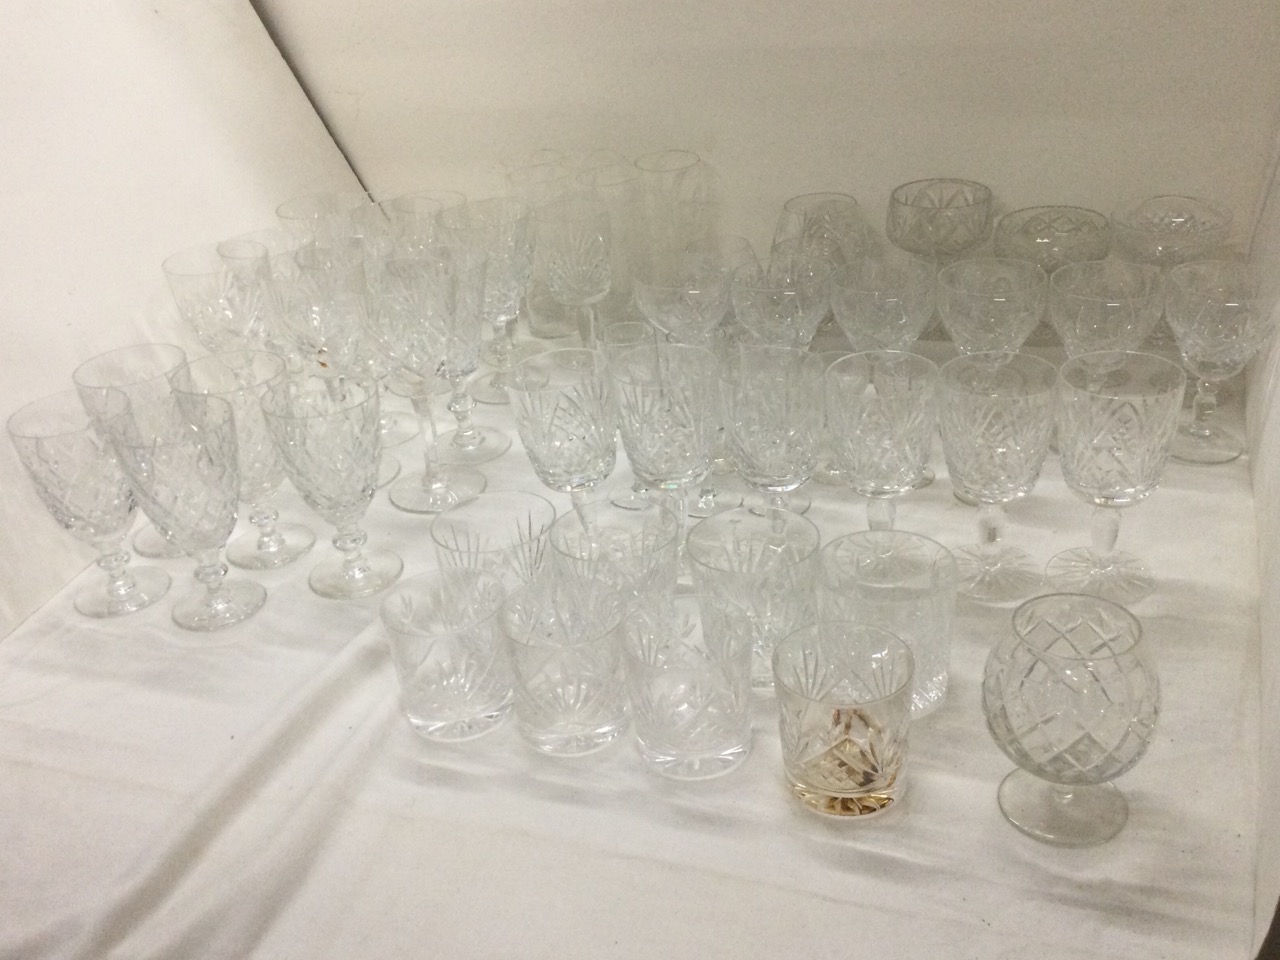 A quantity of drinking glasses - Edinburgh cut crystal, tumblers, wine glasses, brandy balloons, - Bild 2 aus 4